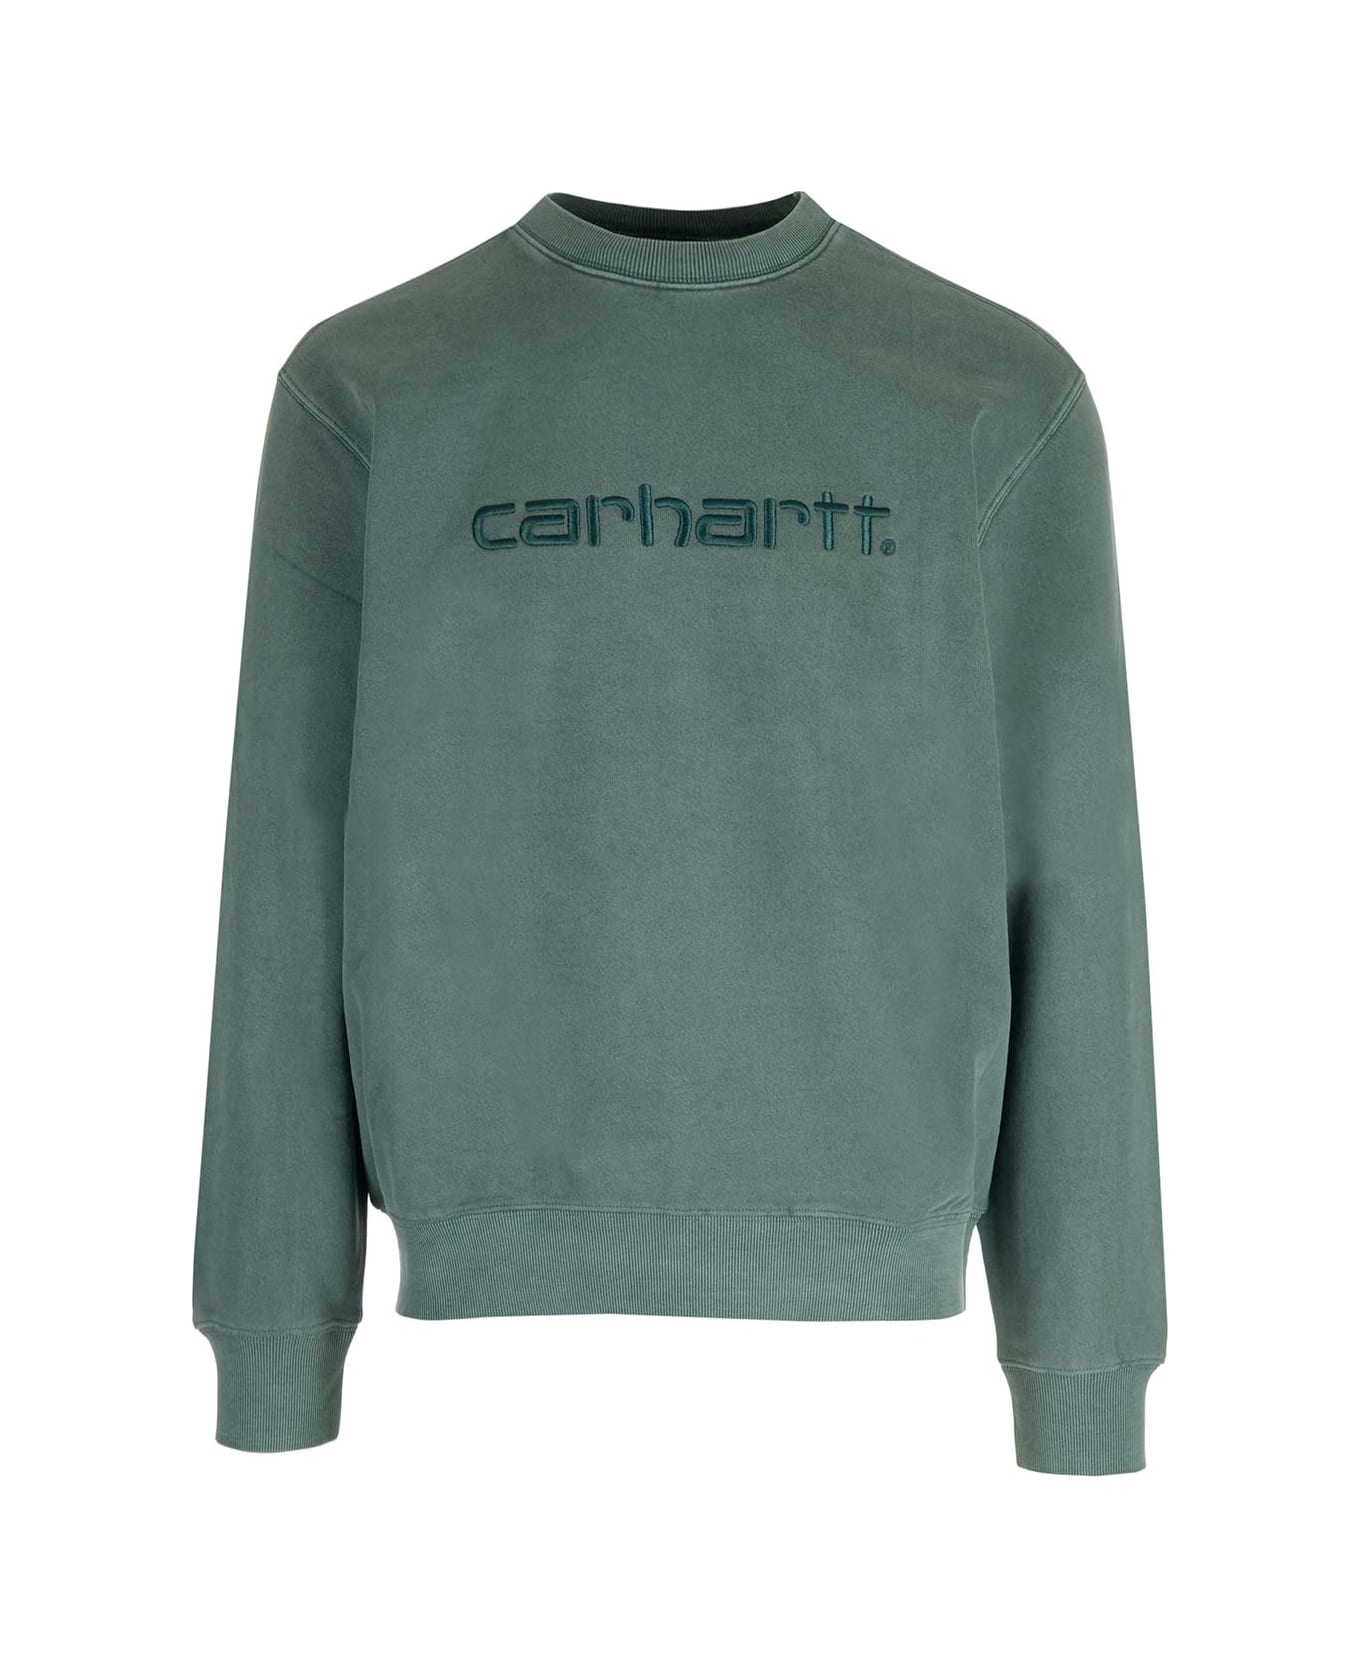 Carhartt Green Logo Sweatshirt - Verde